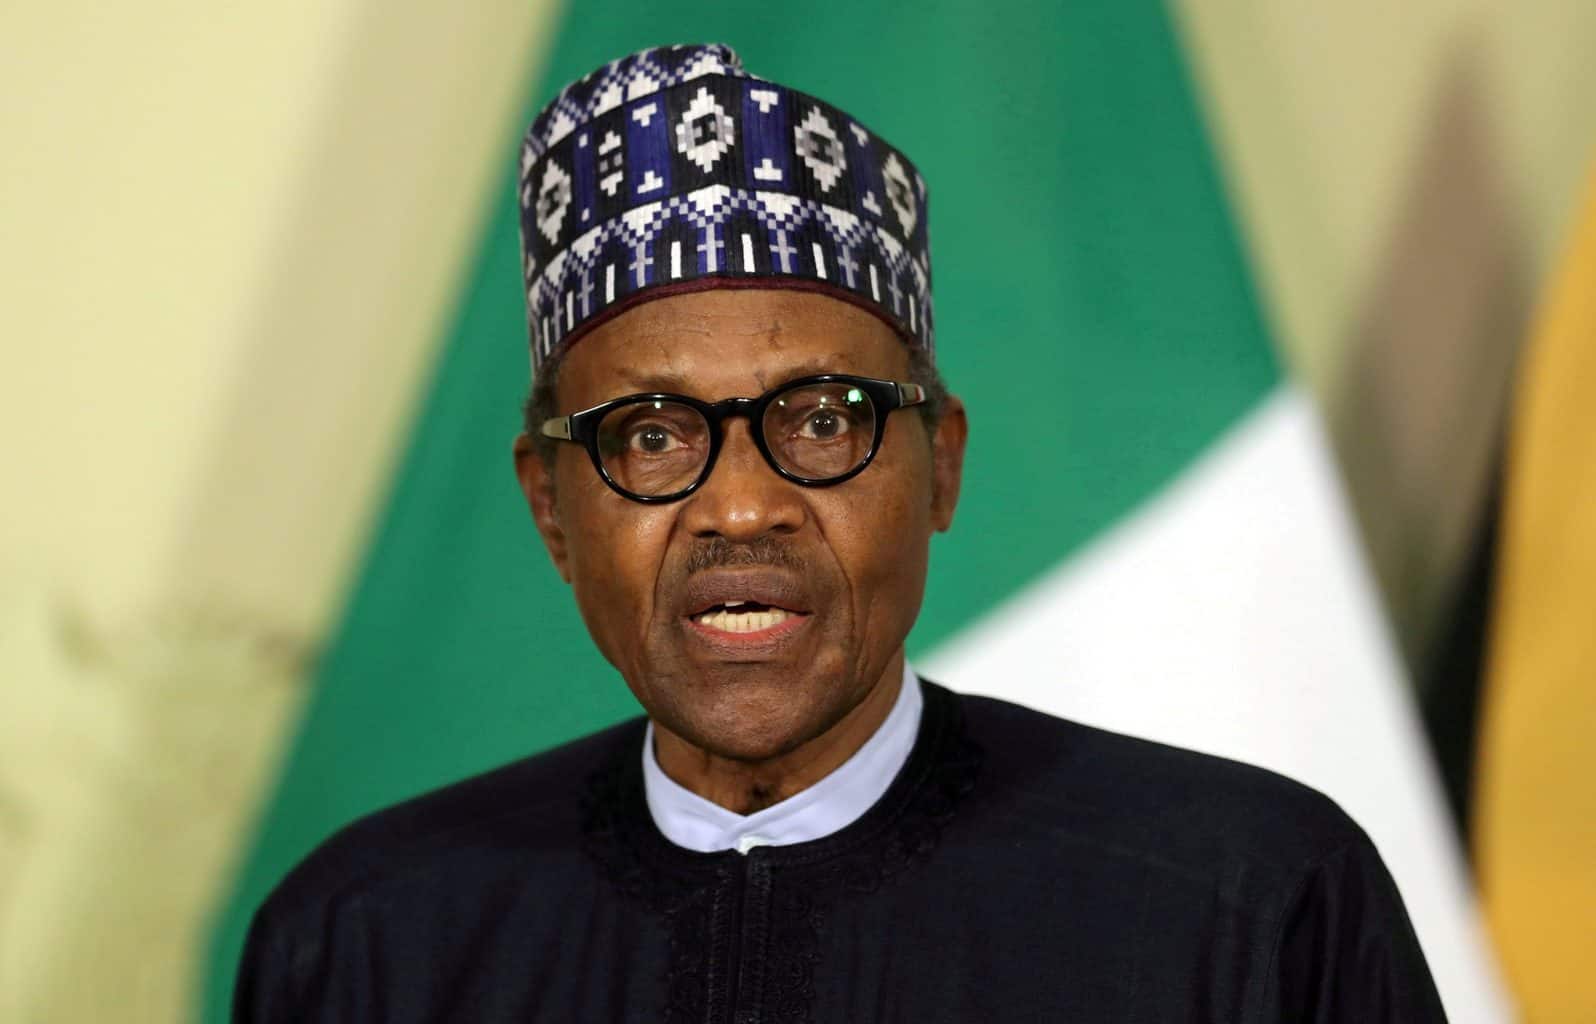 Buhari: Since 1966, millions have died to keep Nigeria united